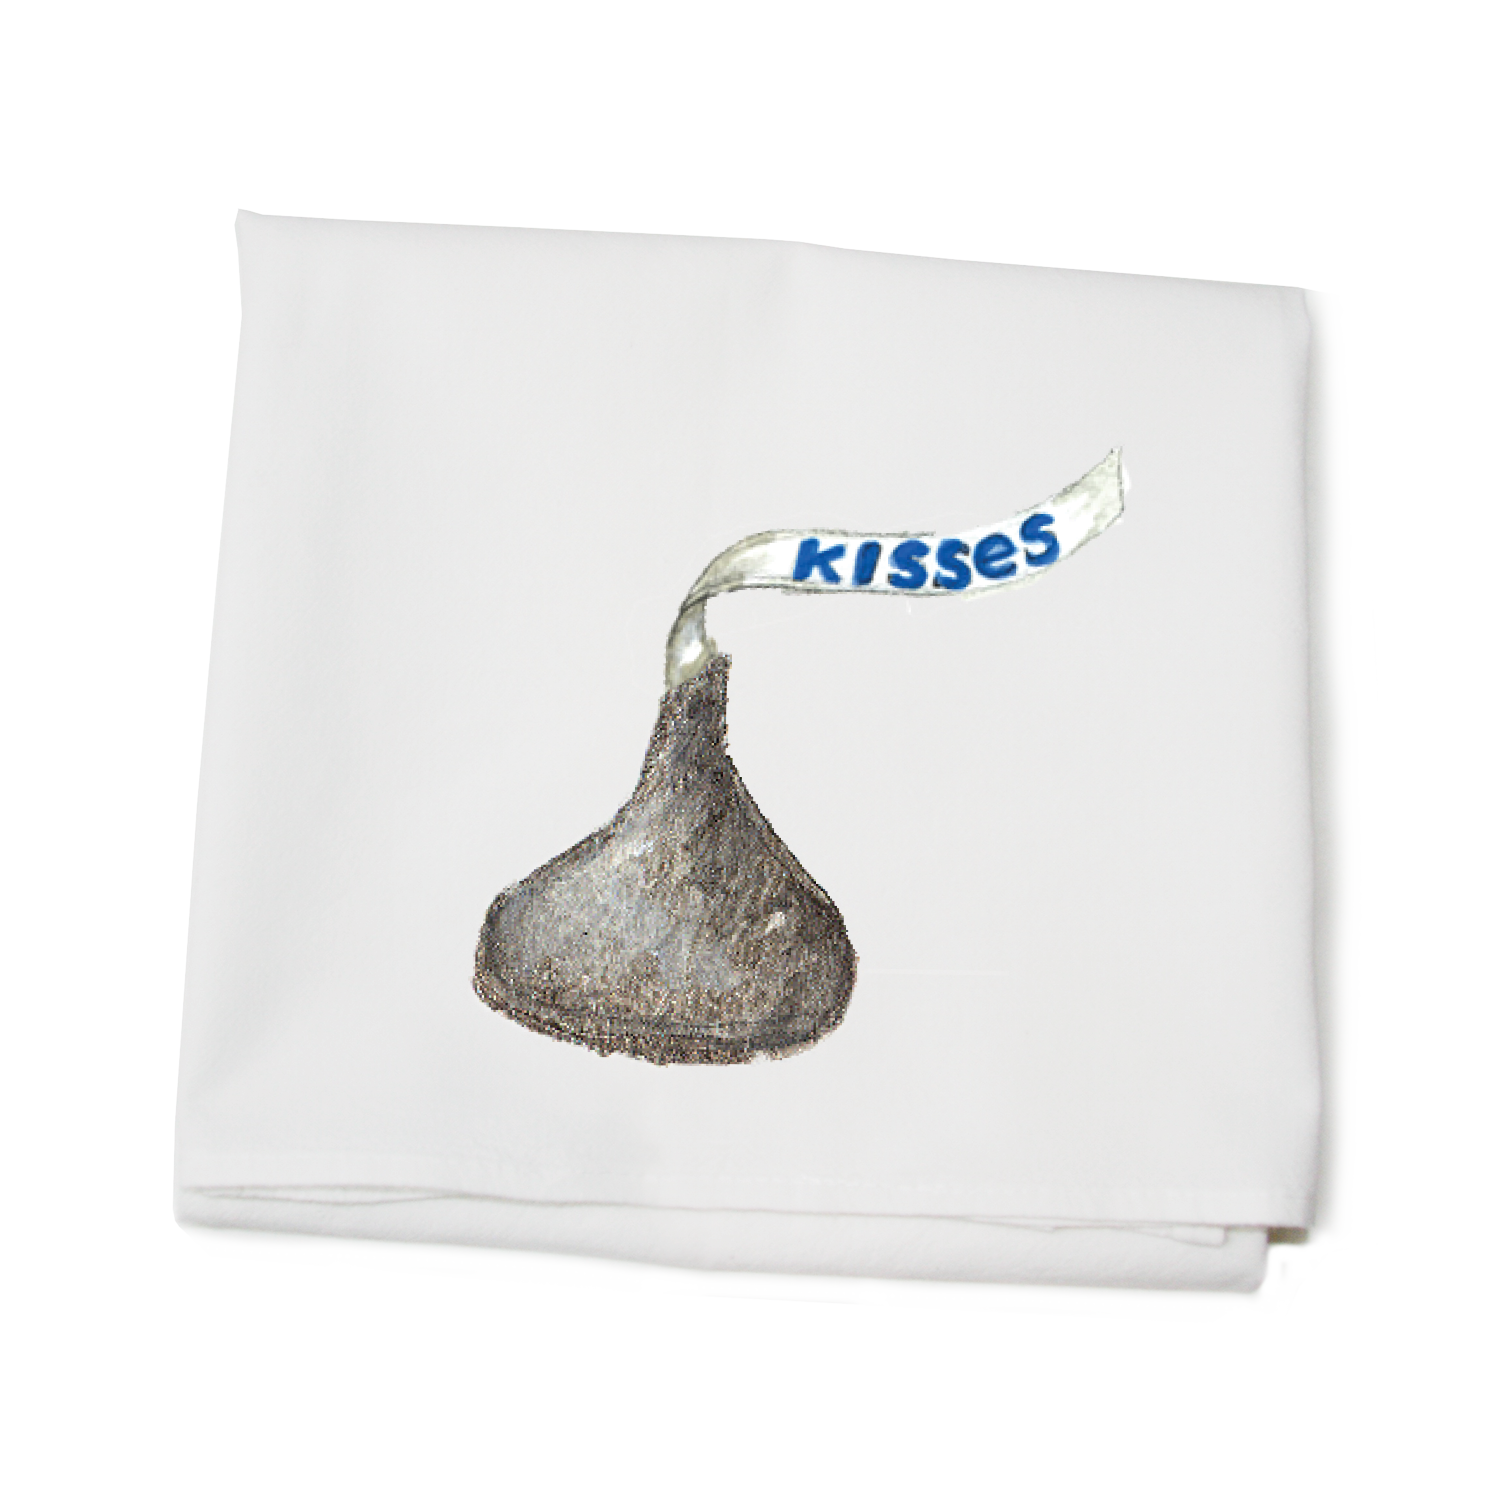 hershey's kiss flour sack towel